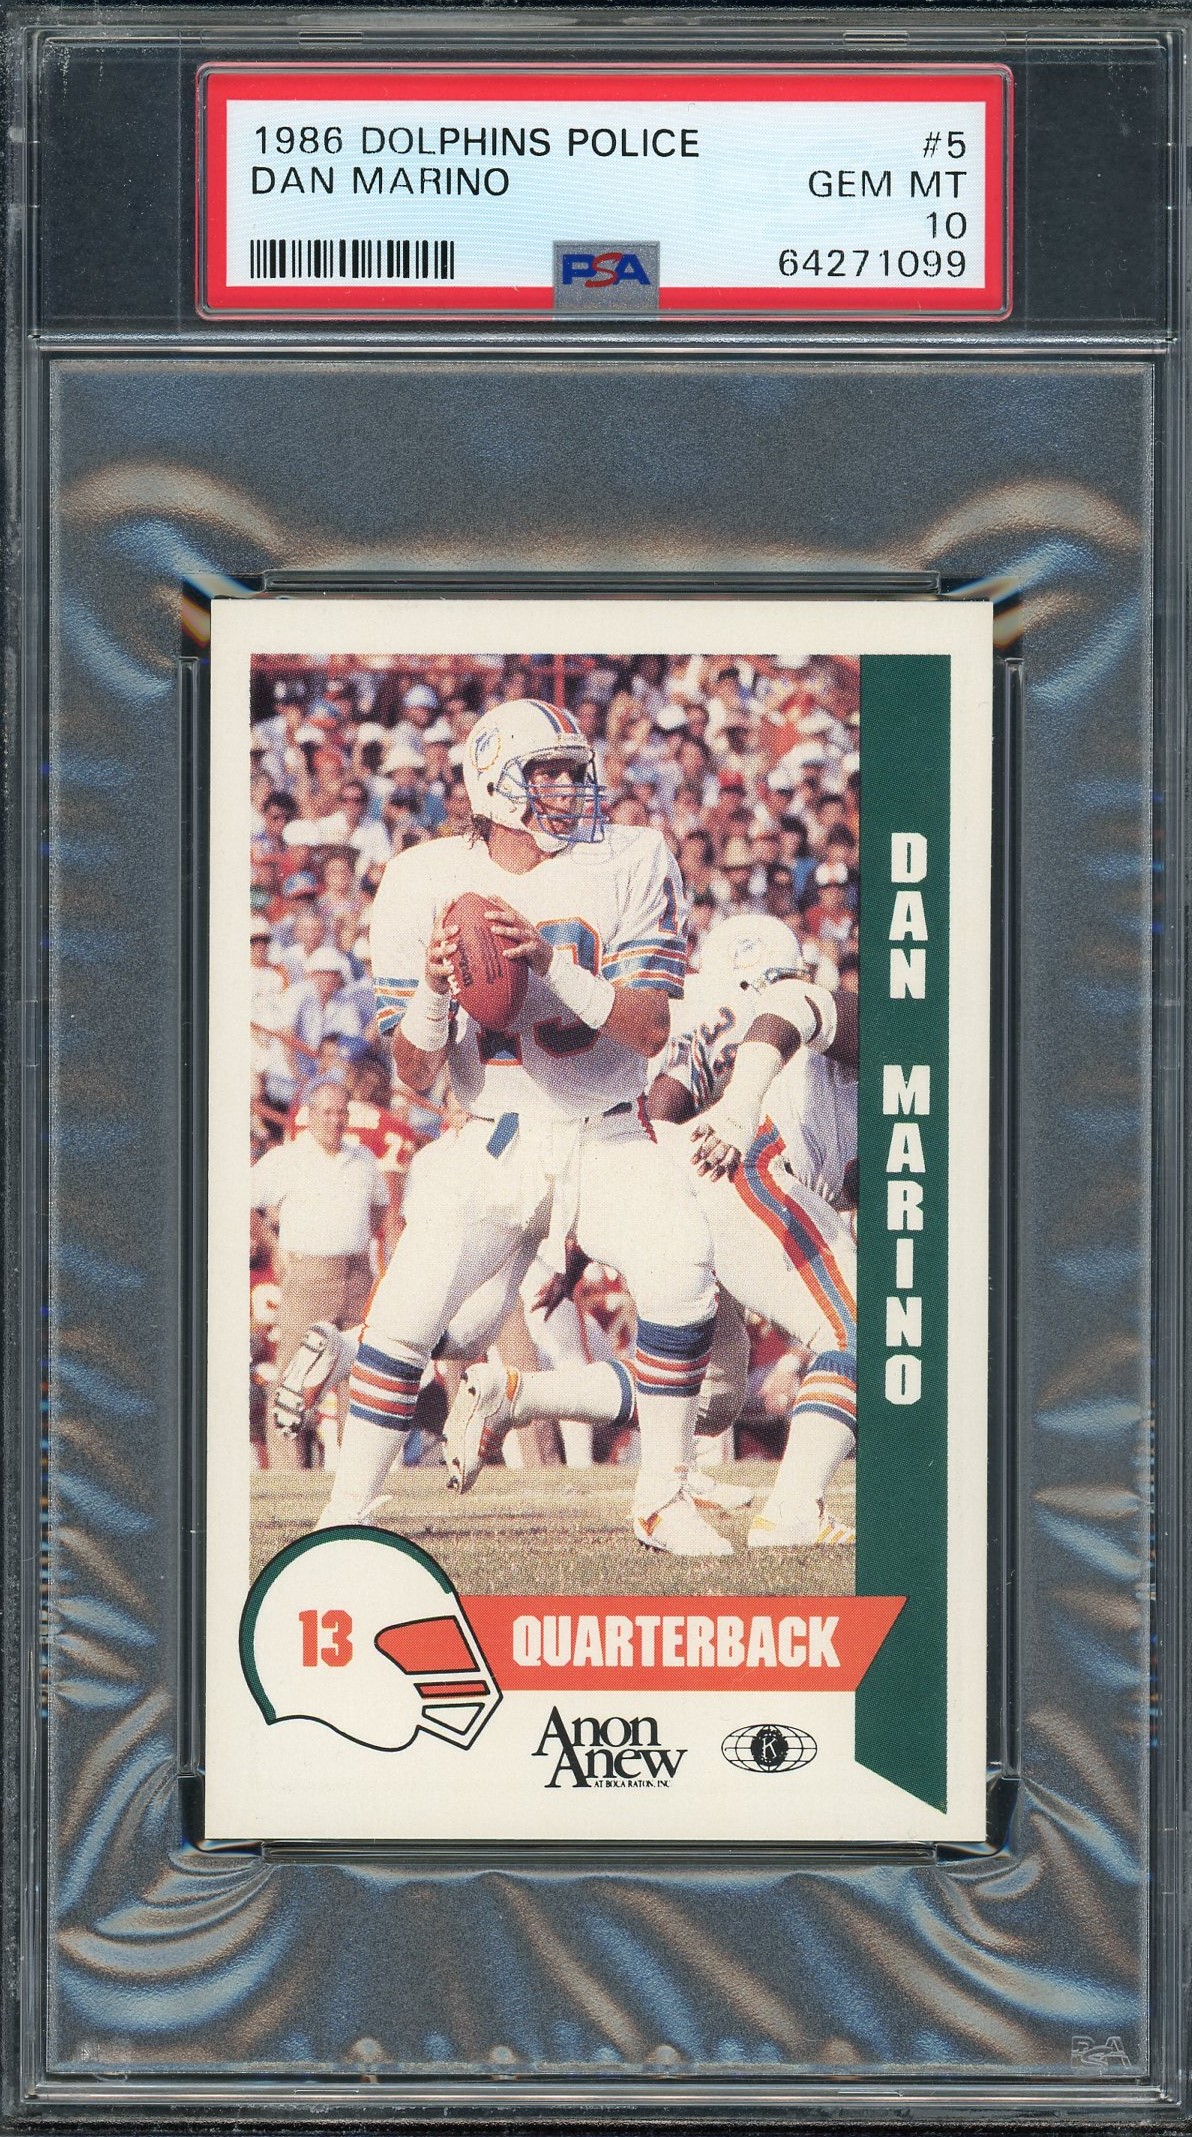 Dan Marino 1984 Dolphins Police Football Rookie Card #5 Graded PSA 10